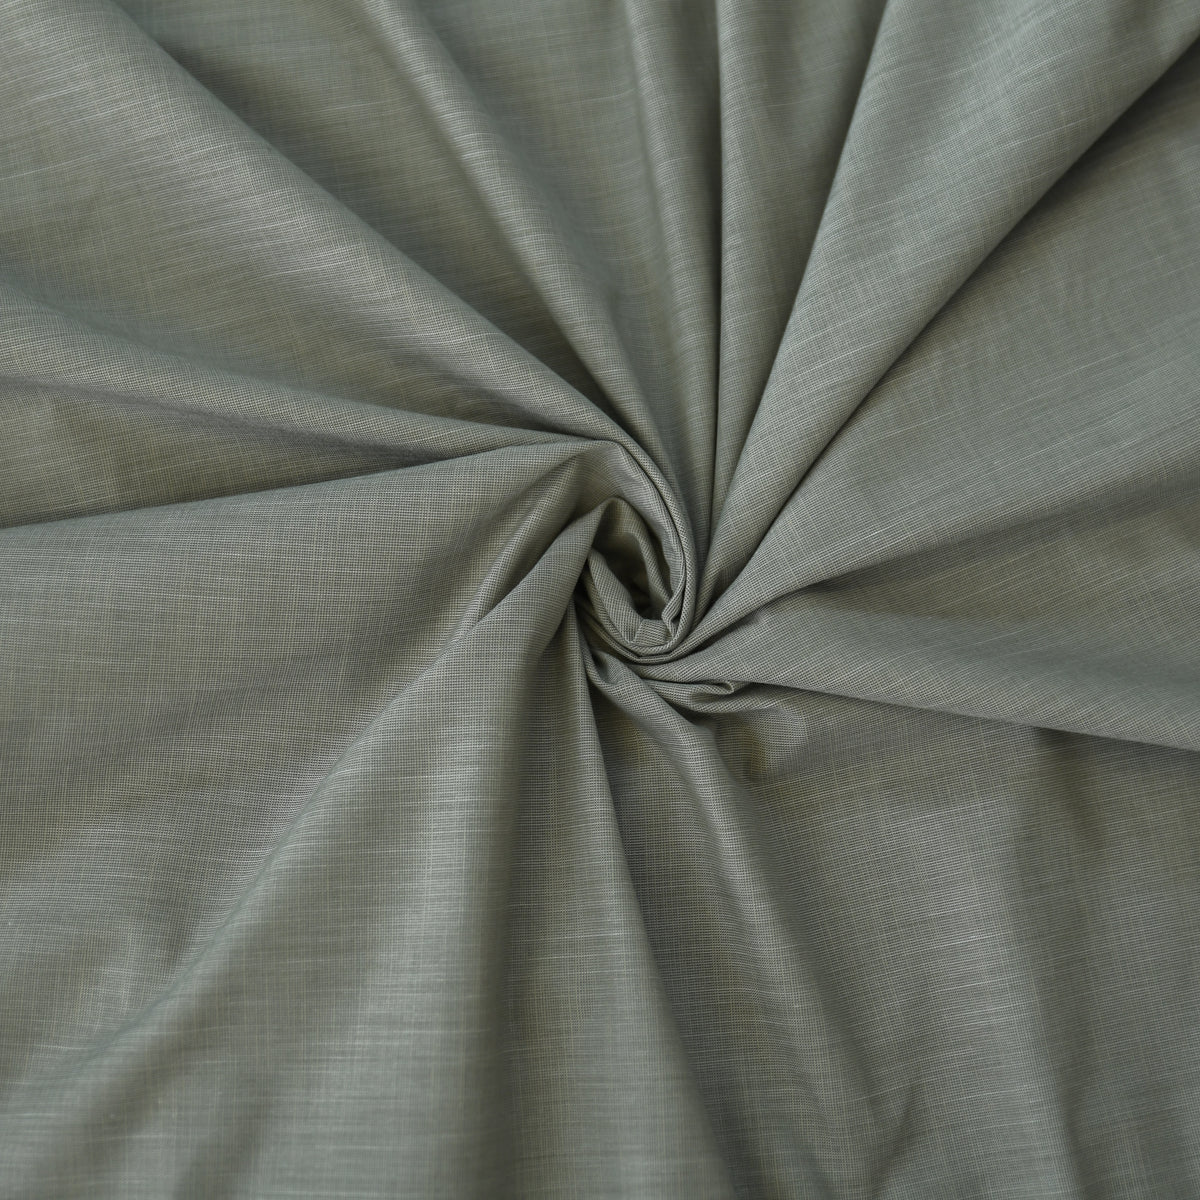 Night curtain taupe gray Mina